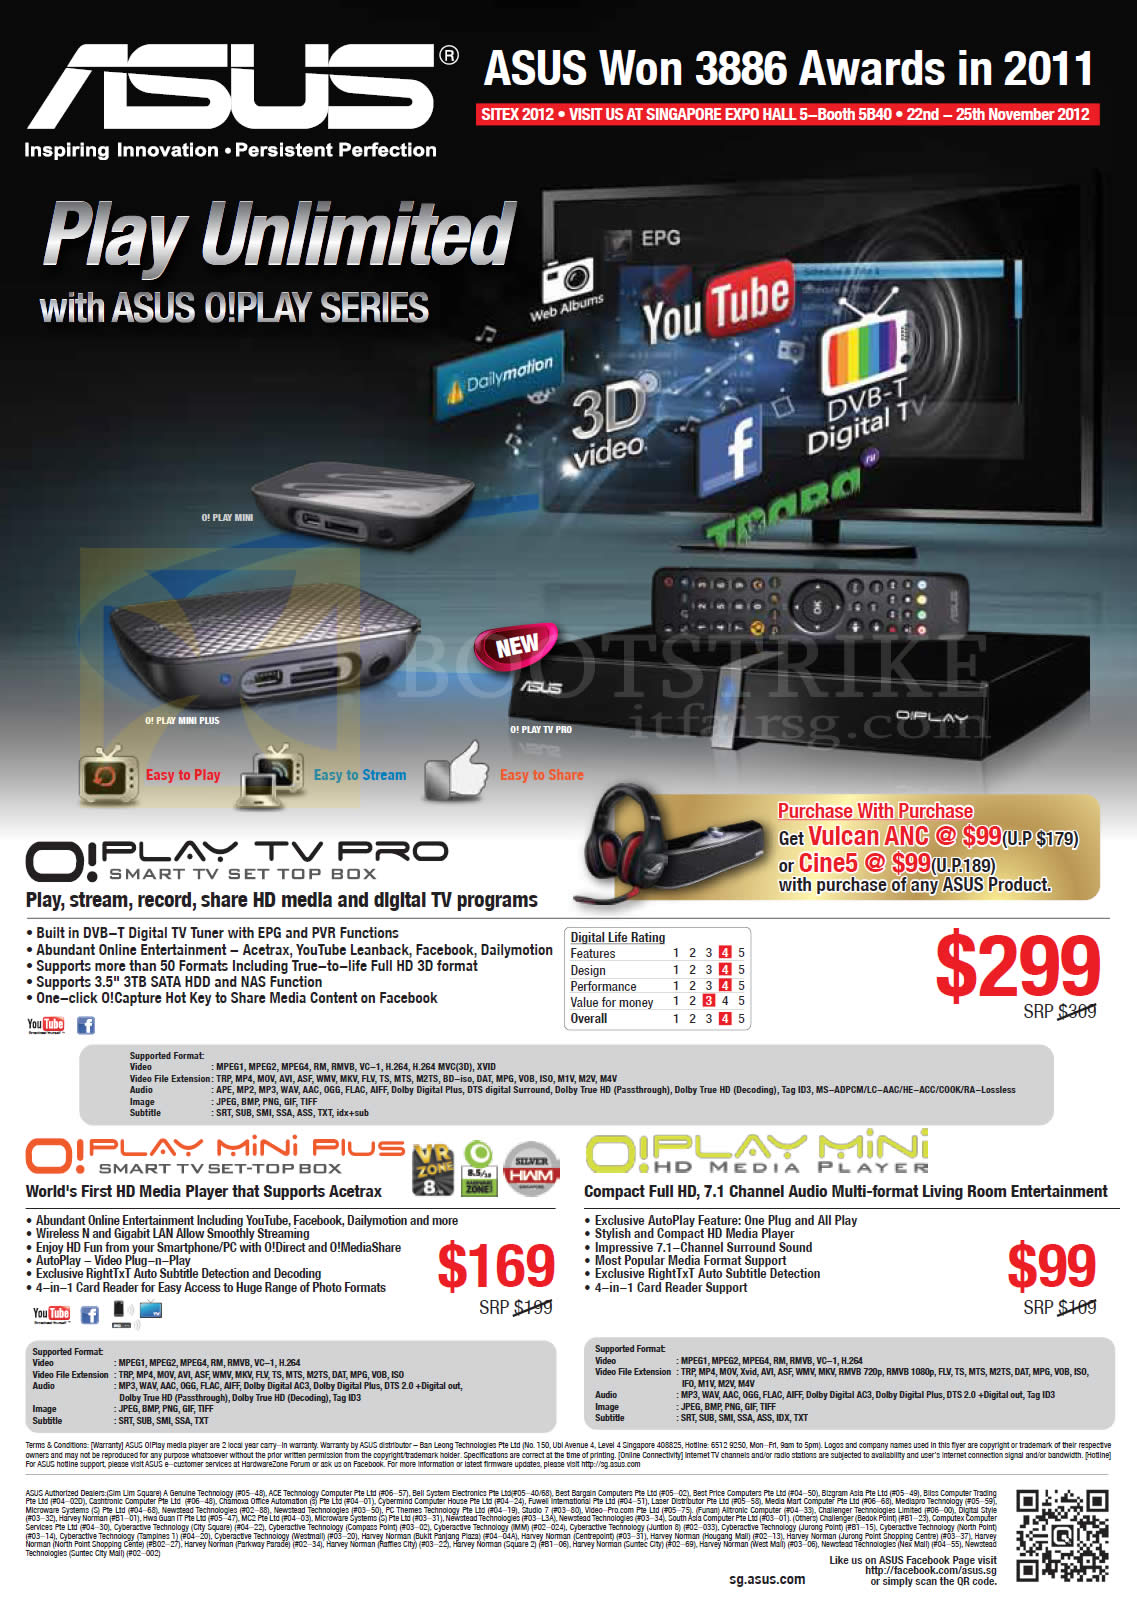 SITEX 2012 price list image brochure of ASUS Media Players O Play TV Pro Smart TV Settop Box, O Play Mini Plus, O Play HD Media Player